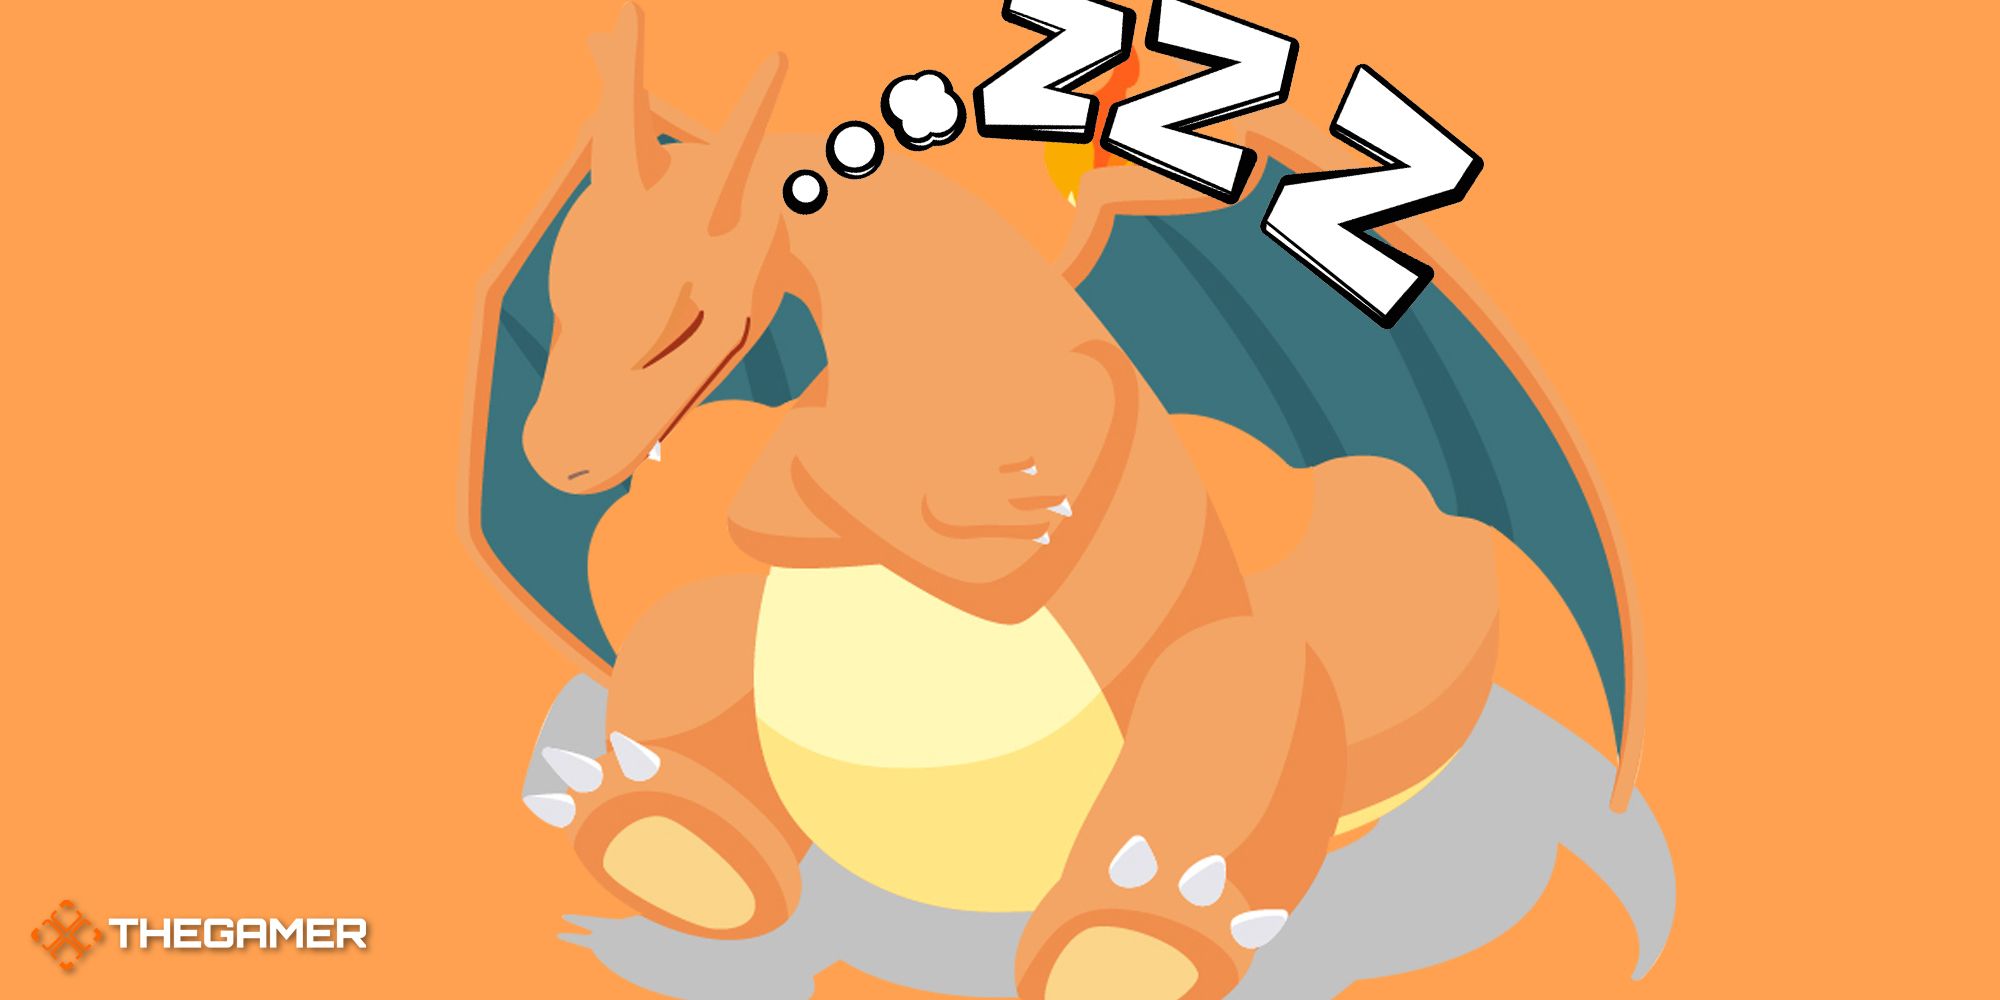 Pikachu - Sleep Style Dex - Pokémon Sleep